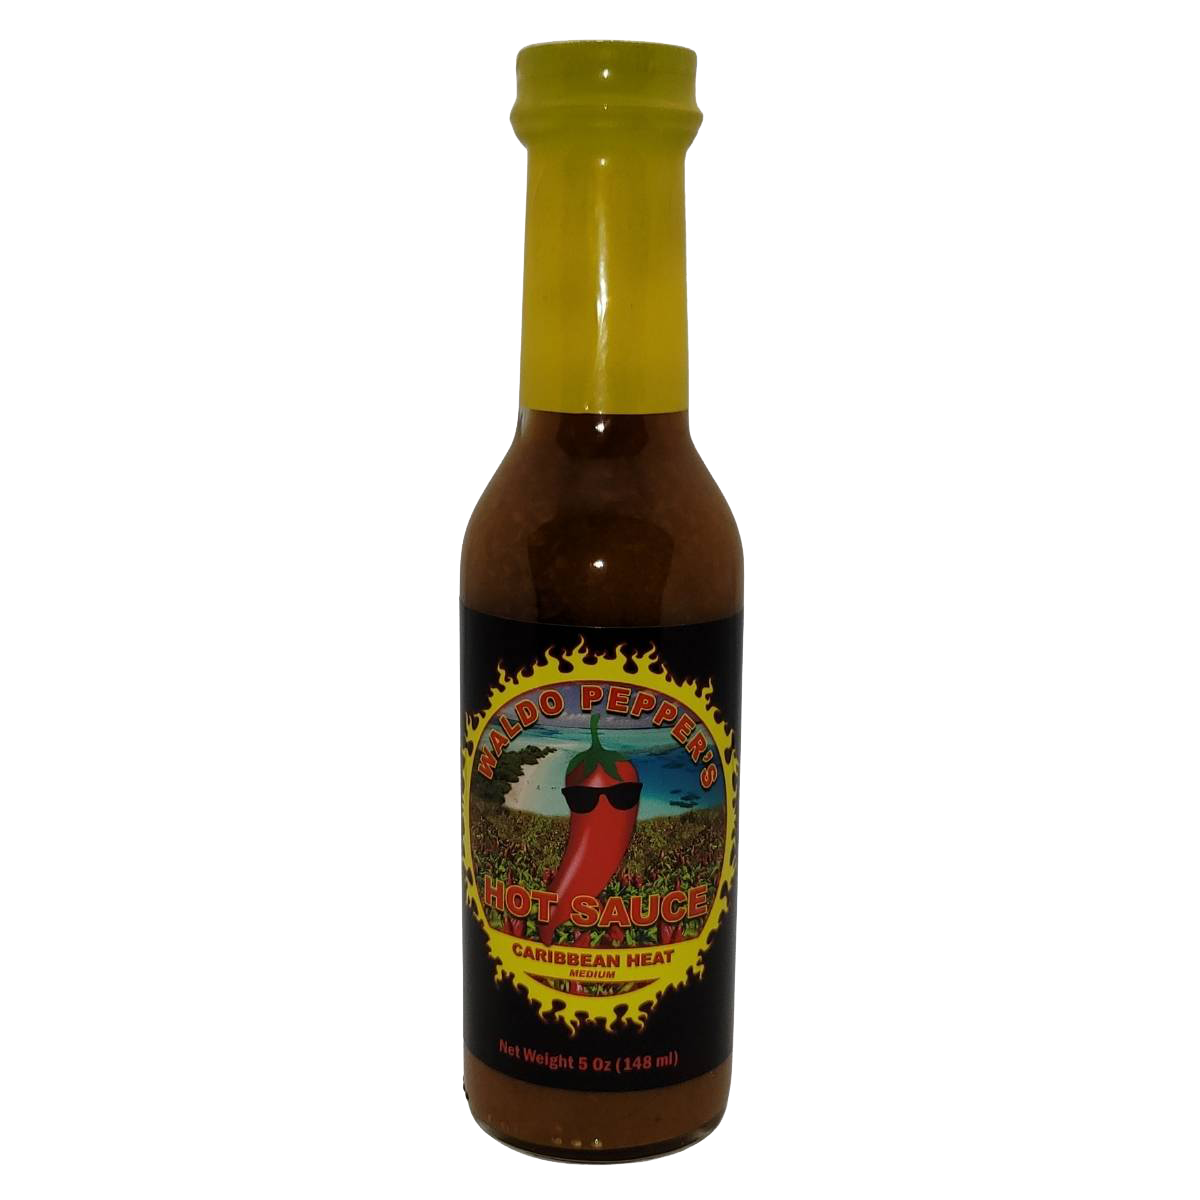 Waldo Peppers Hot Sauce - Caribbean Heat